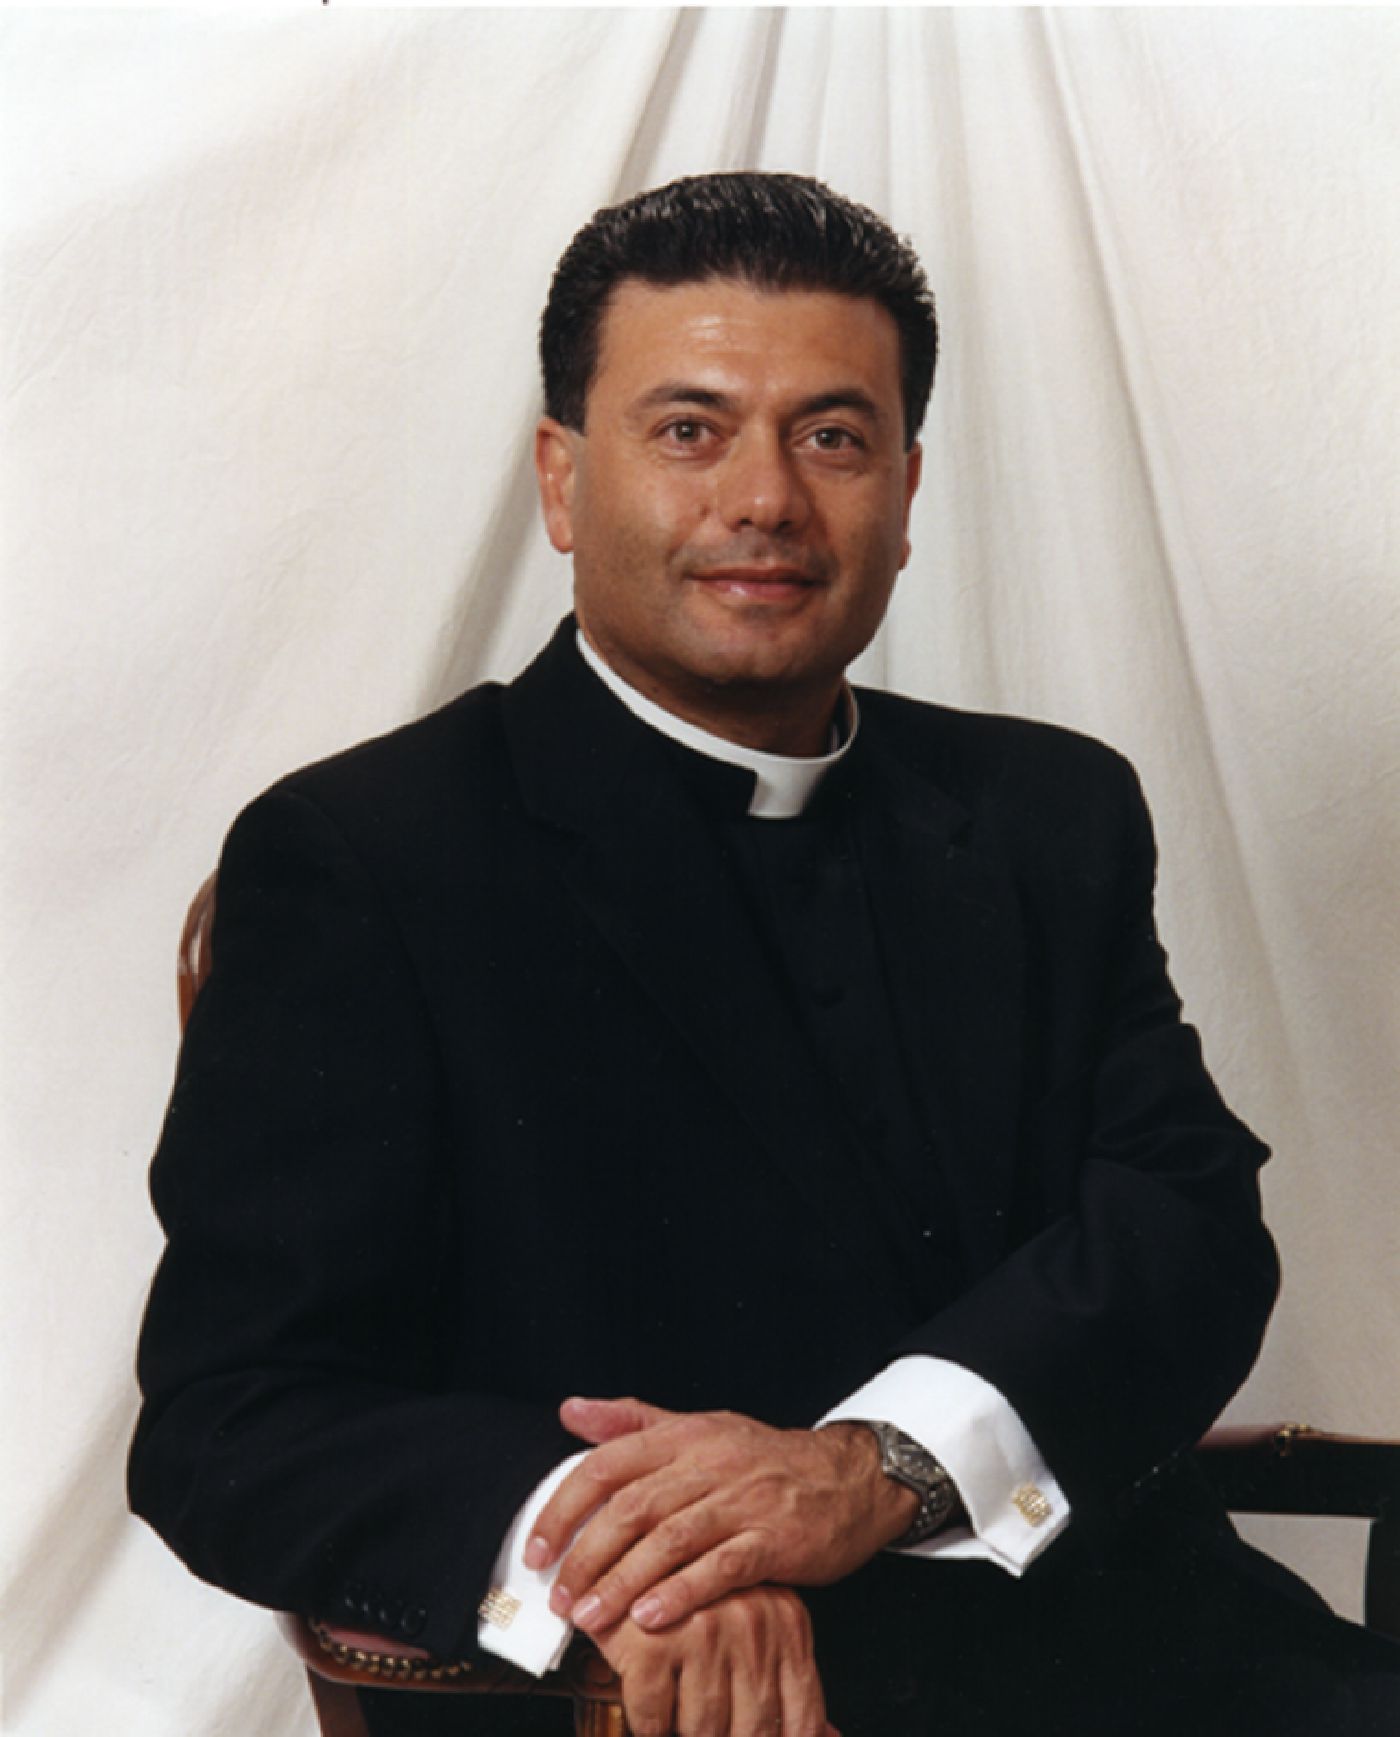 Chorbishop sharbel Maroun